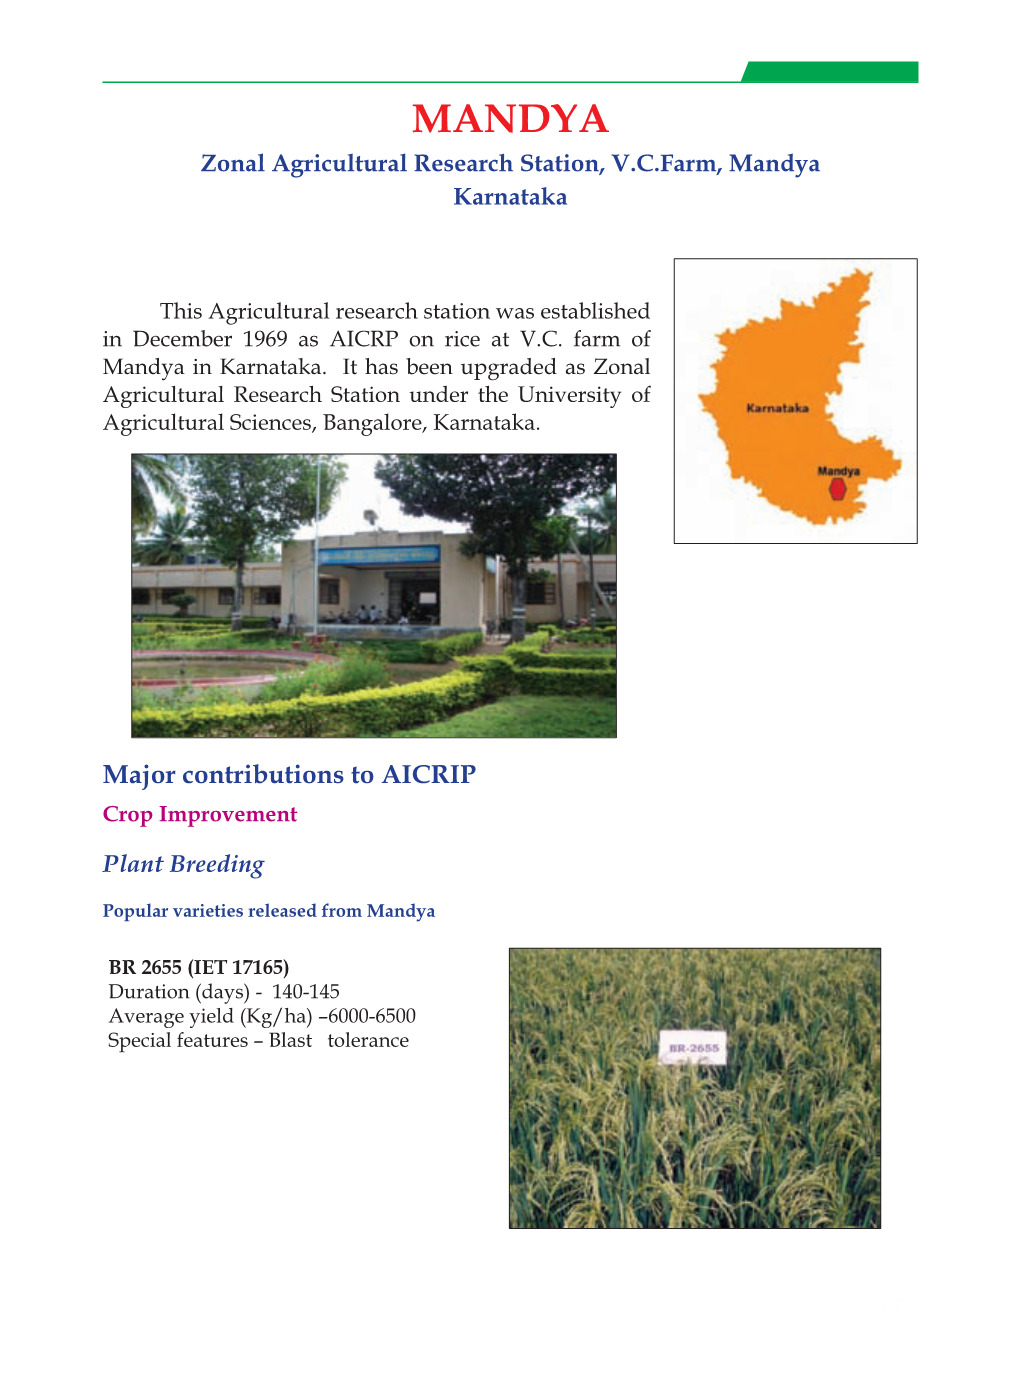 MANDYA Zonal Agricultural Research Station, V.C.Farm, Mandya Karnataka